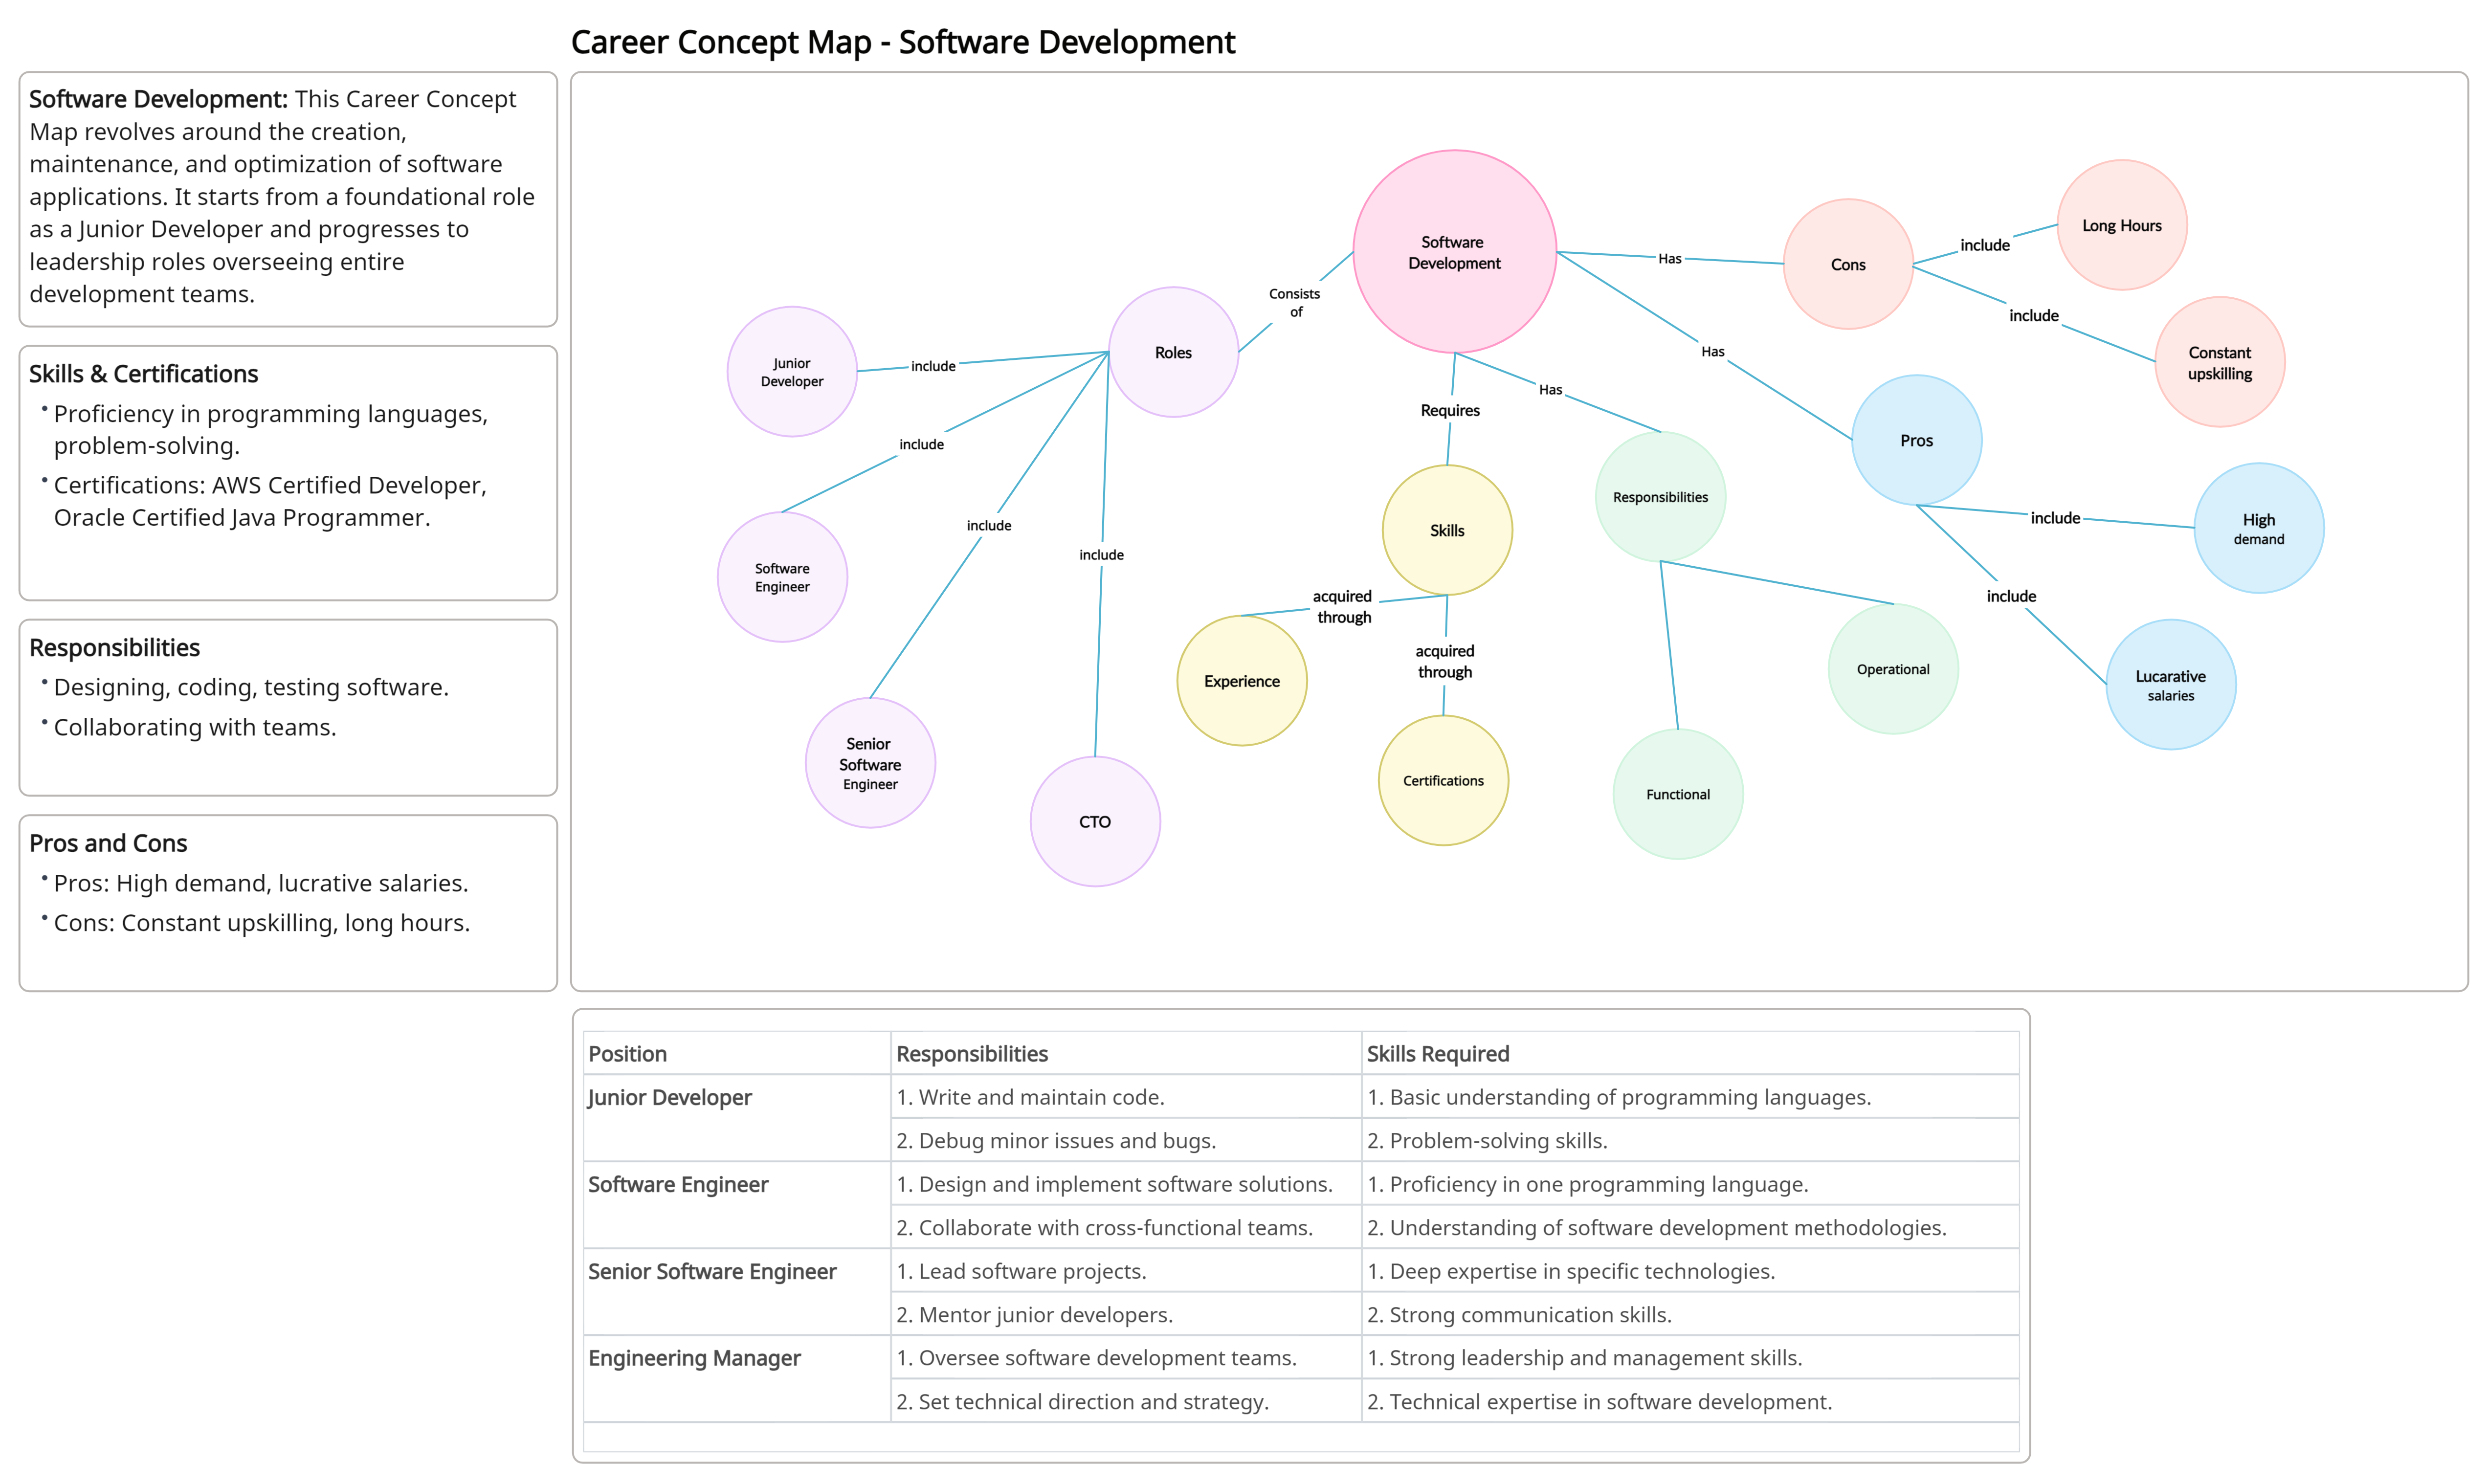 Software Development Career Concept Map